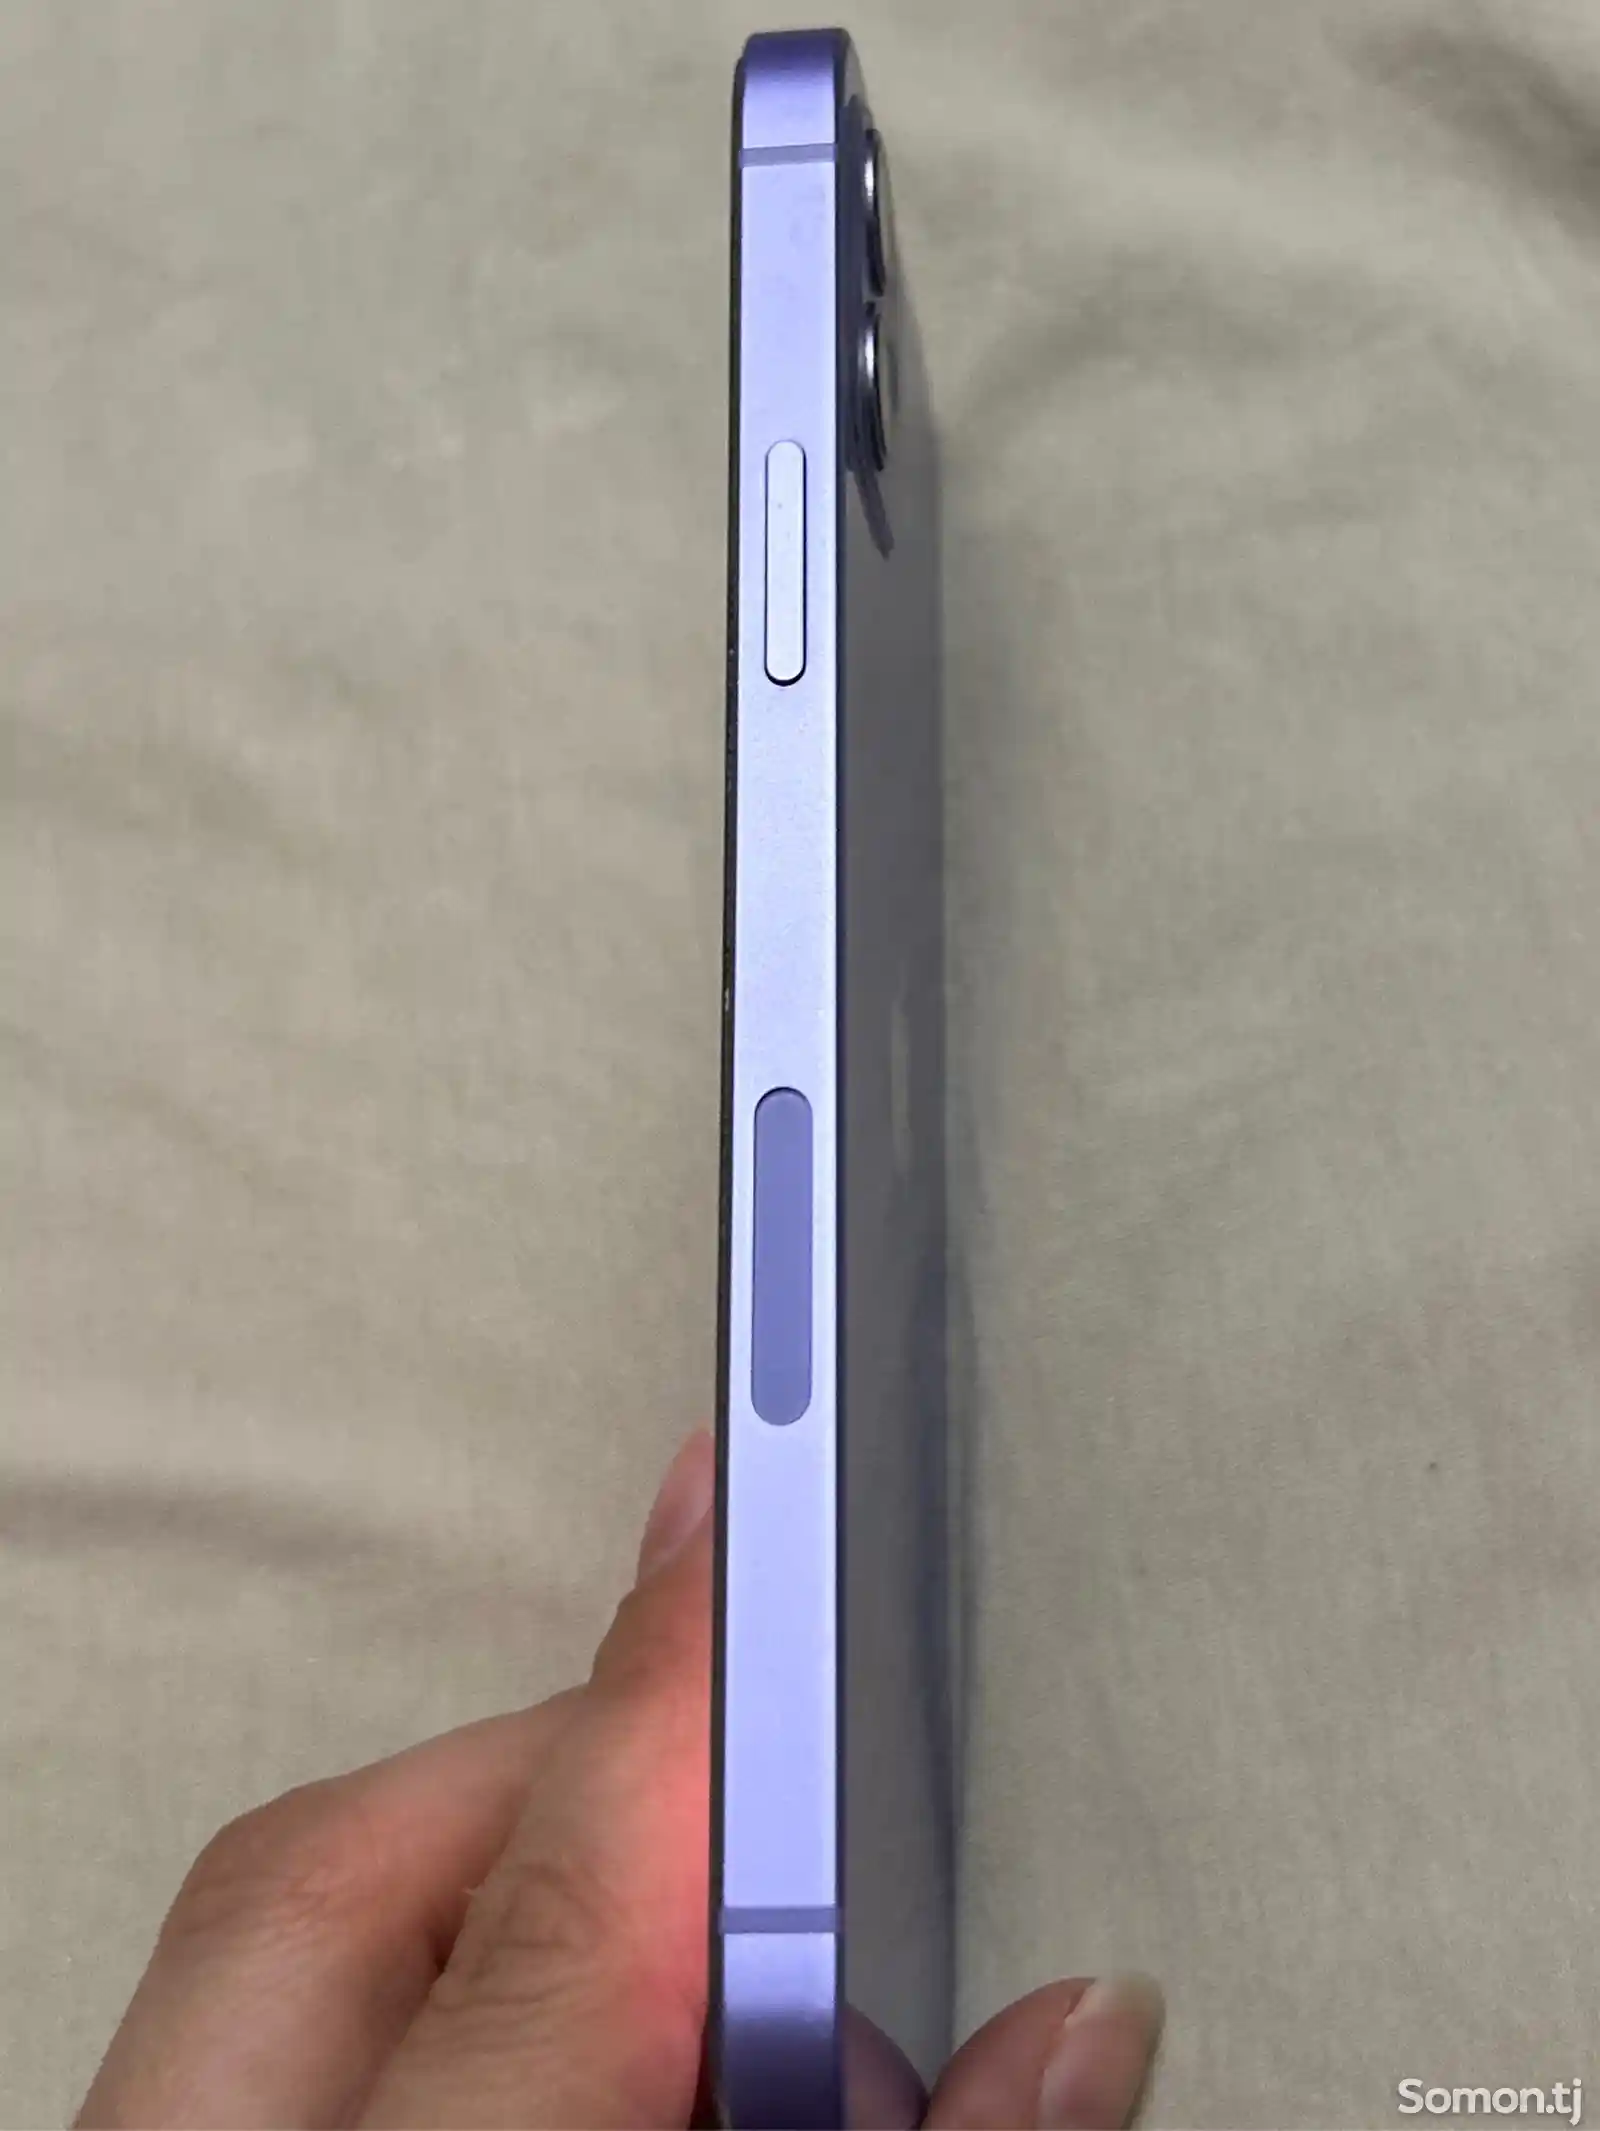 Apple iPhone 12, 128 gb, Purple-3